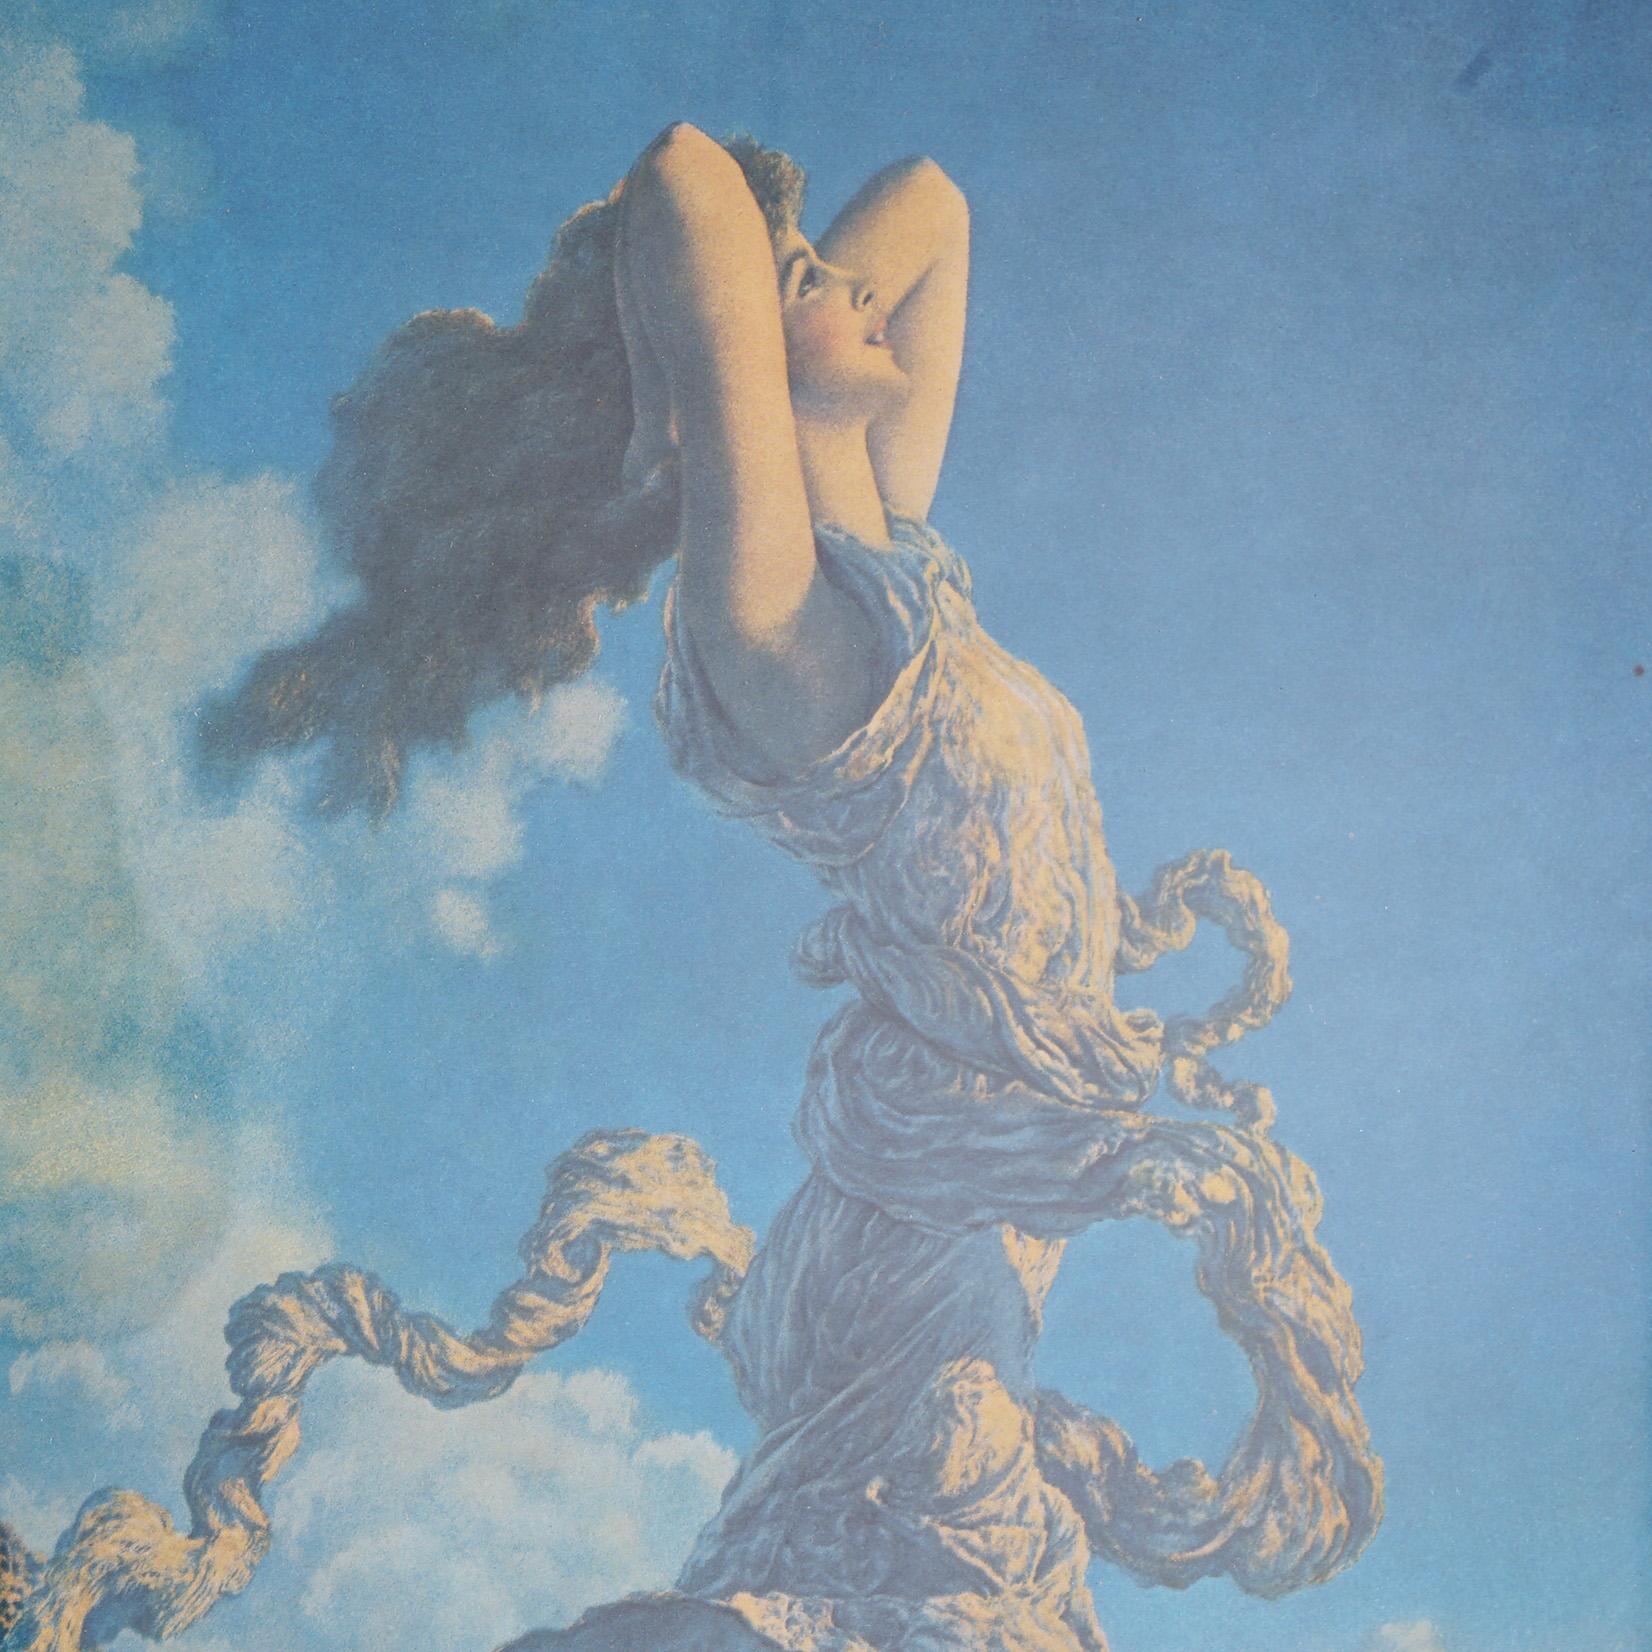 Paper Large Maxfield Parrish Art Deco Print “Ecstasy”, Framed, C1920